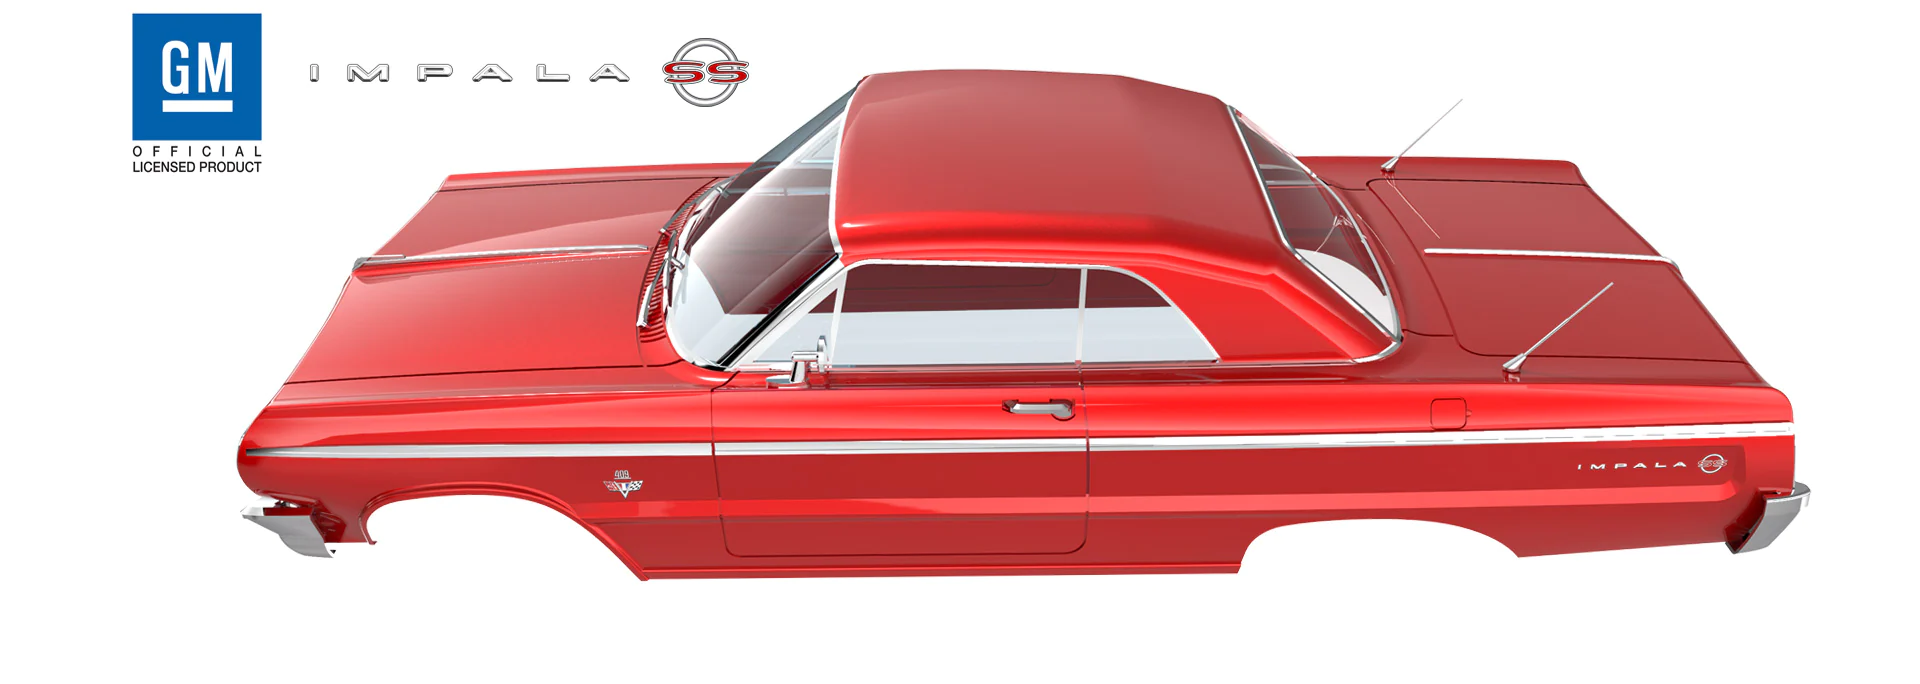 Redcat SixtyFour 1964 Impala RC Lowrider For Sale TeamRedcatShop.com 21